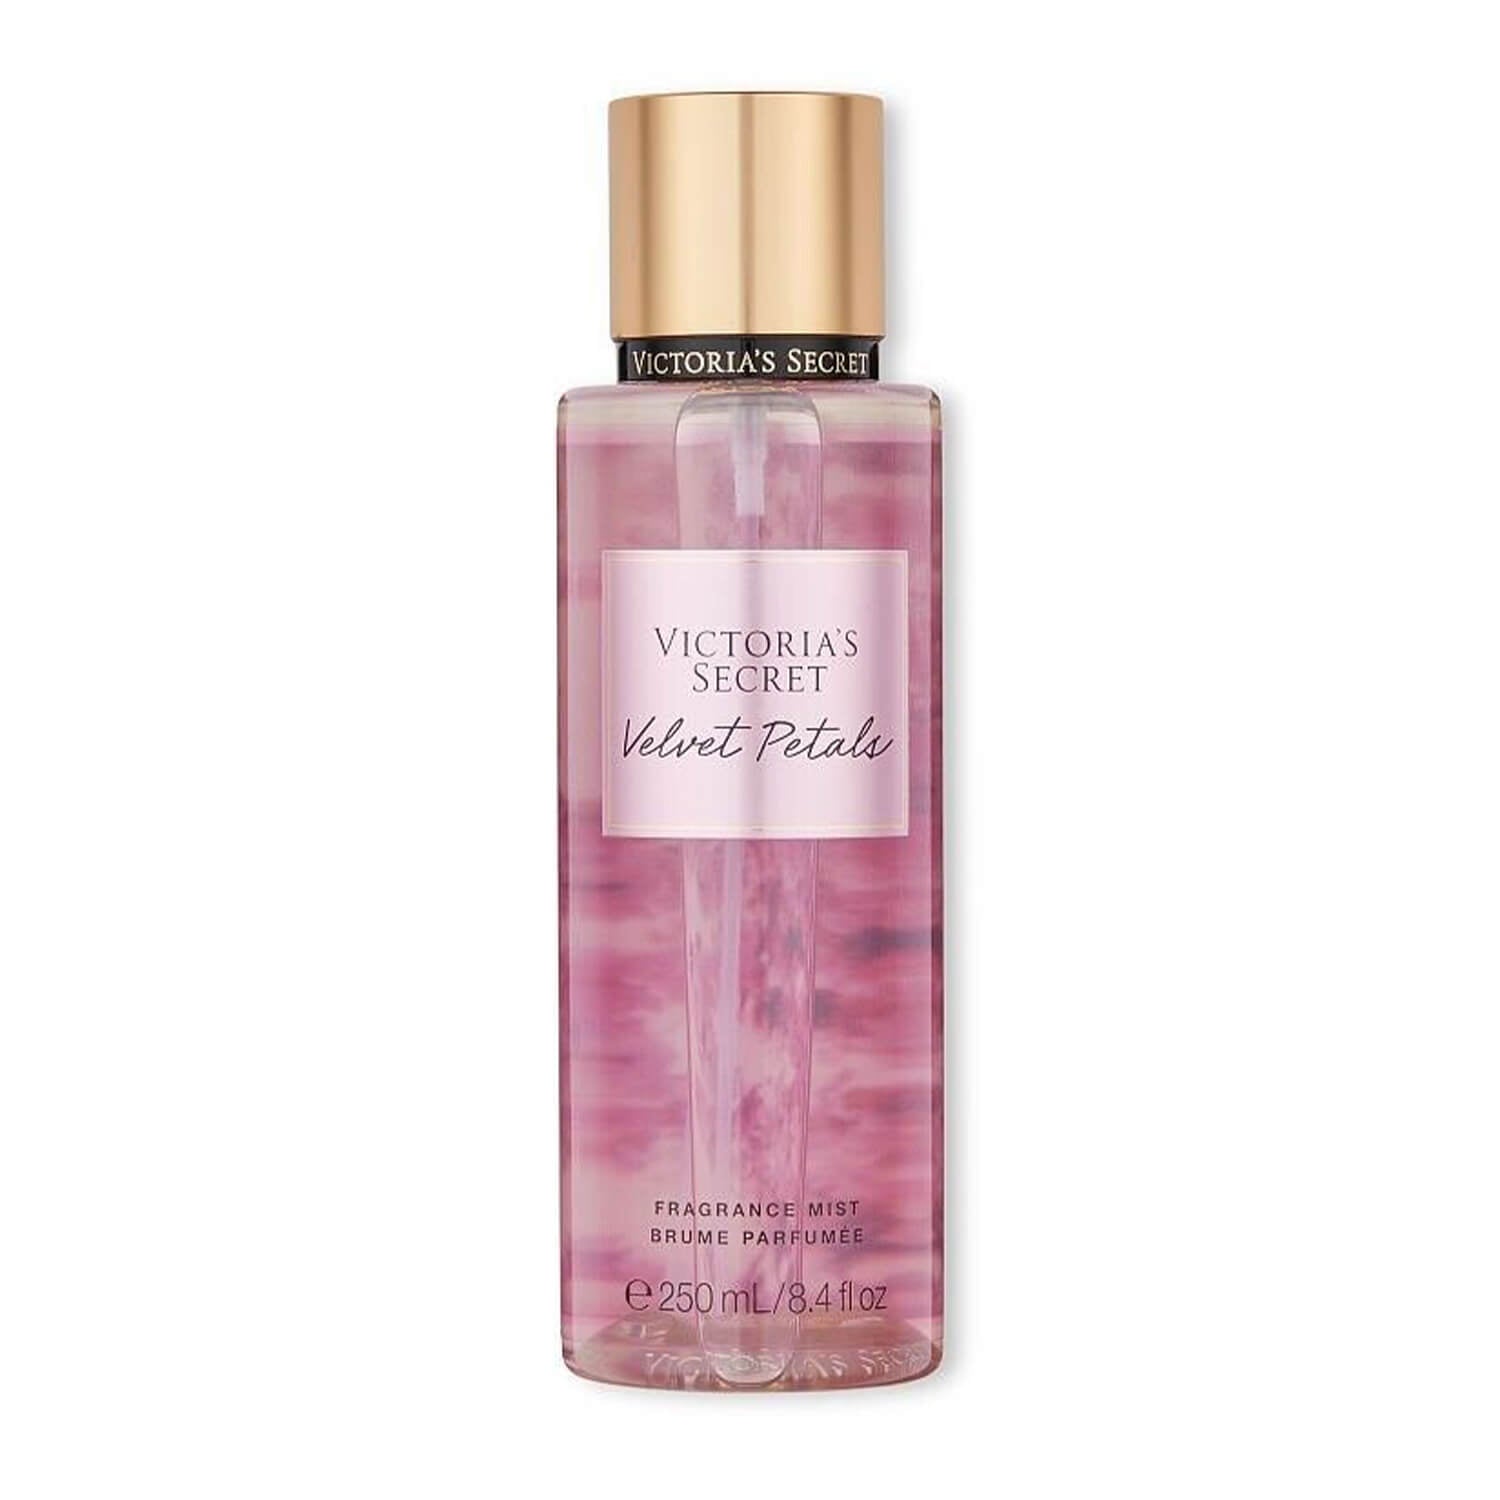 Shop Victoria's Secret Fragrance Mist in Velvet Petals fragrance available at Heygirl.pk for delivery in Pakistan. 